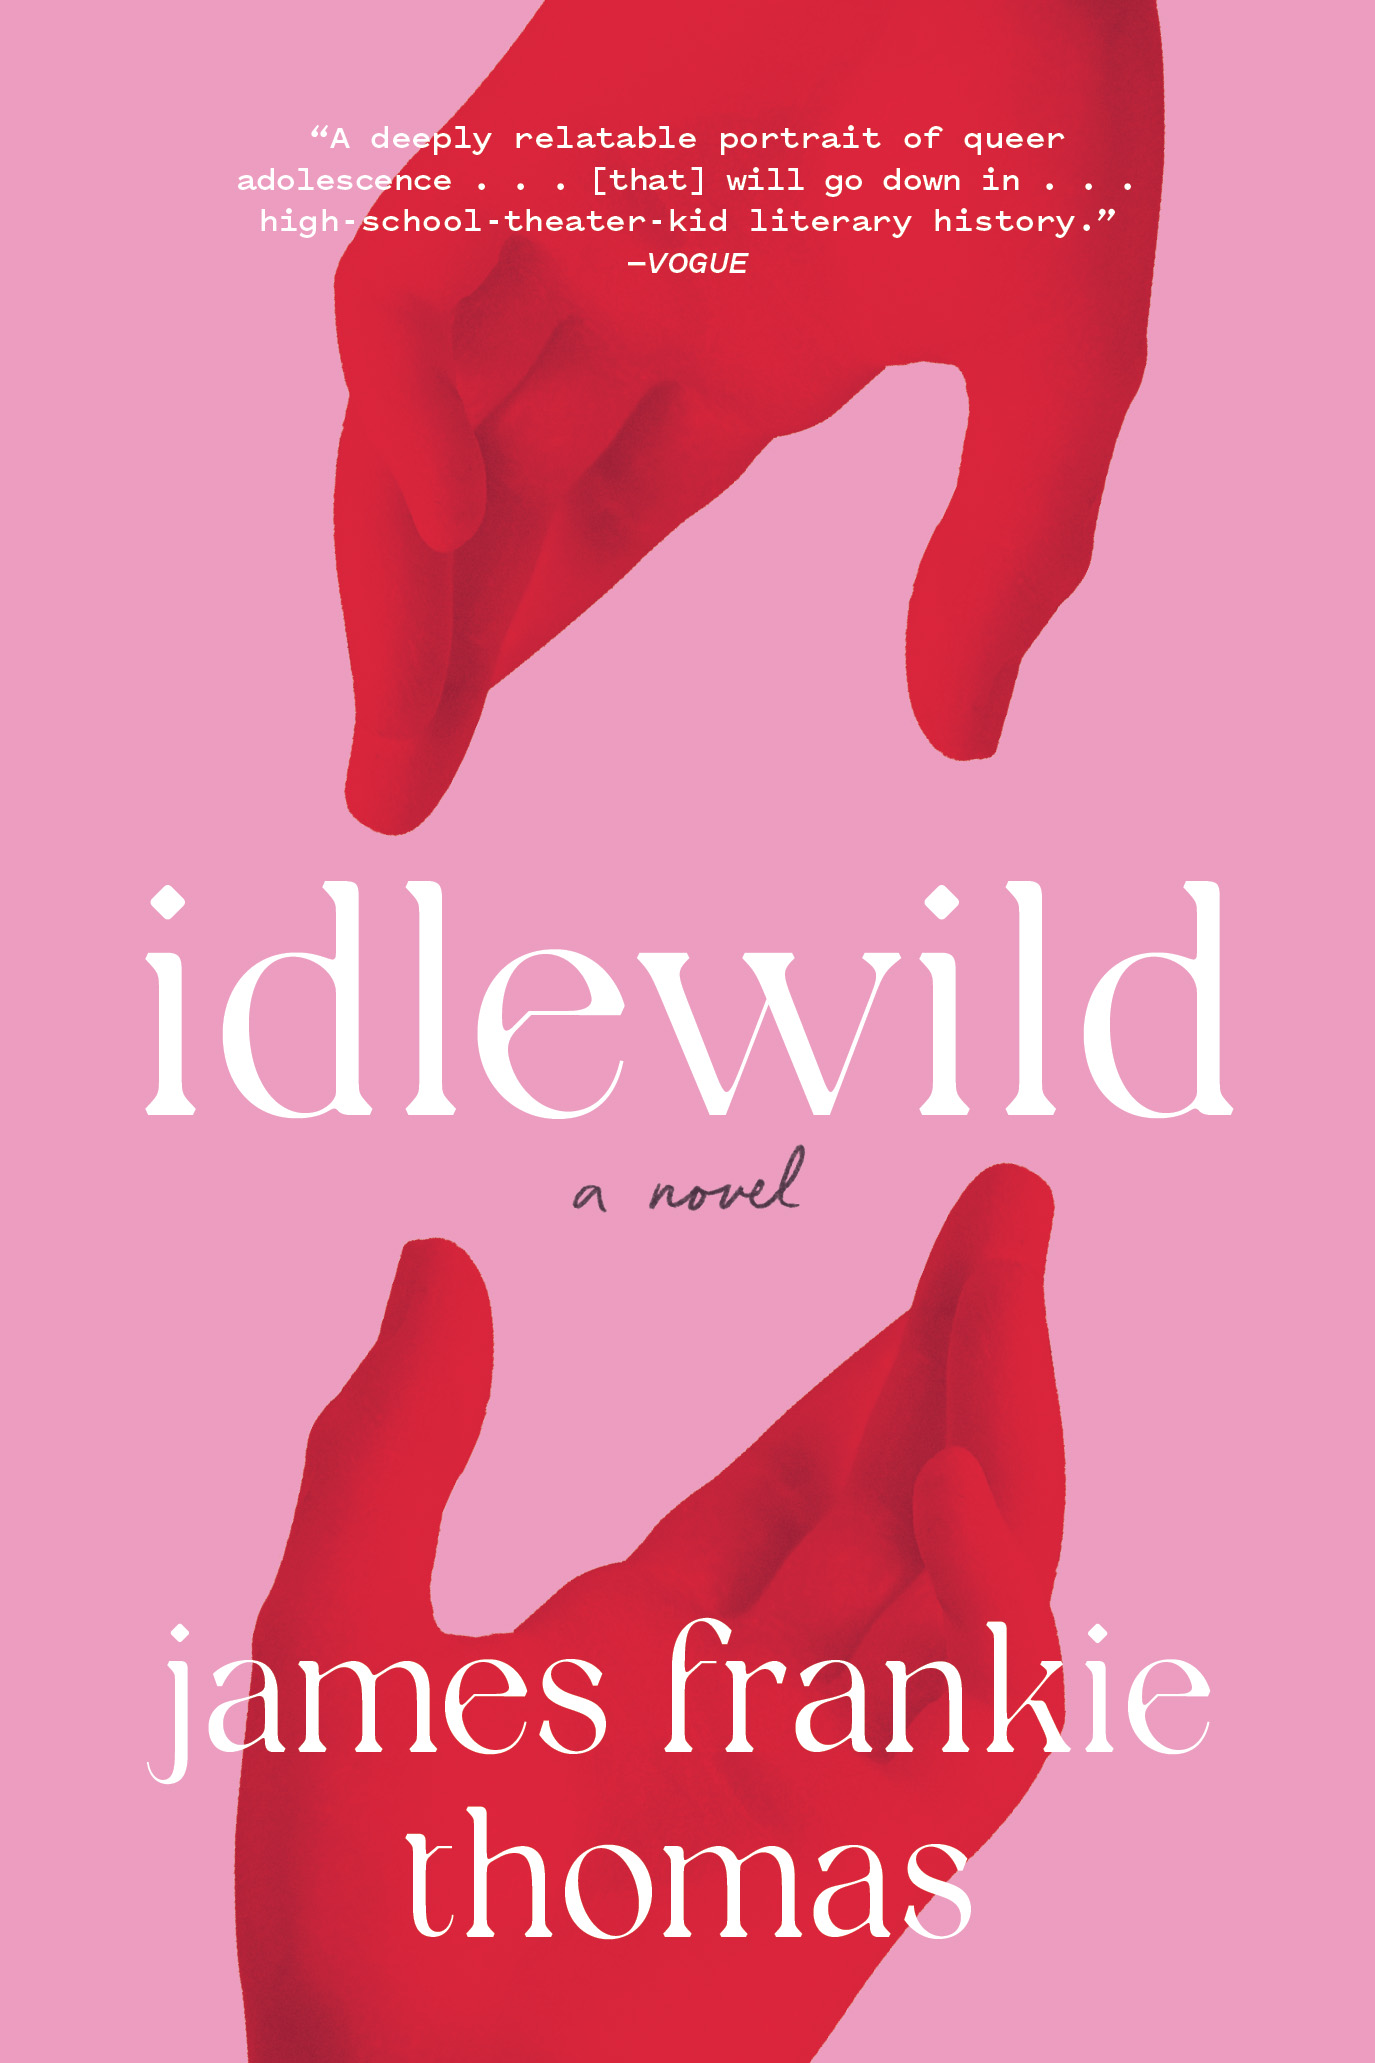 idlewild-book-cover